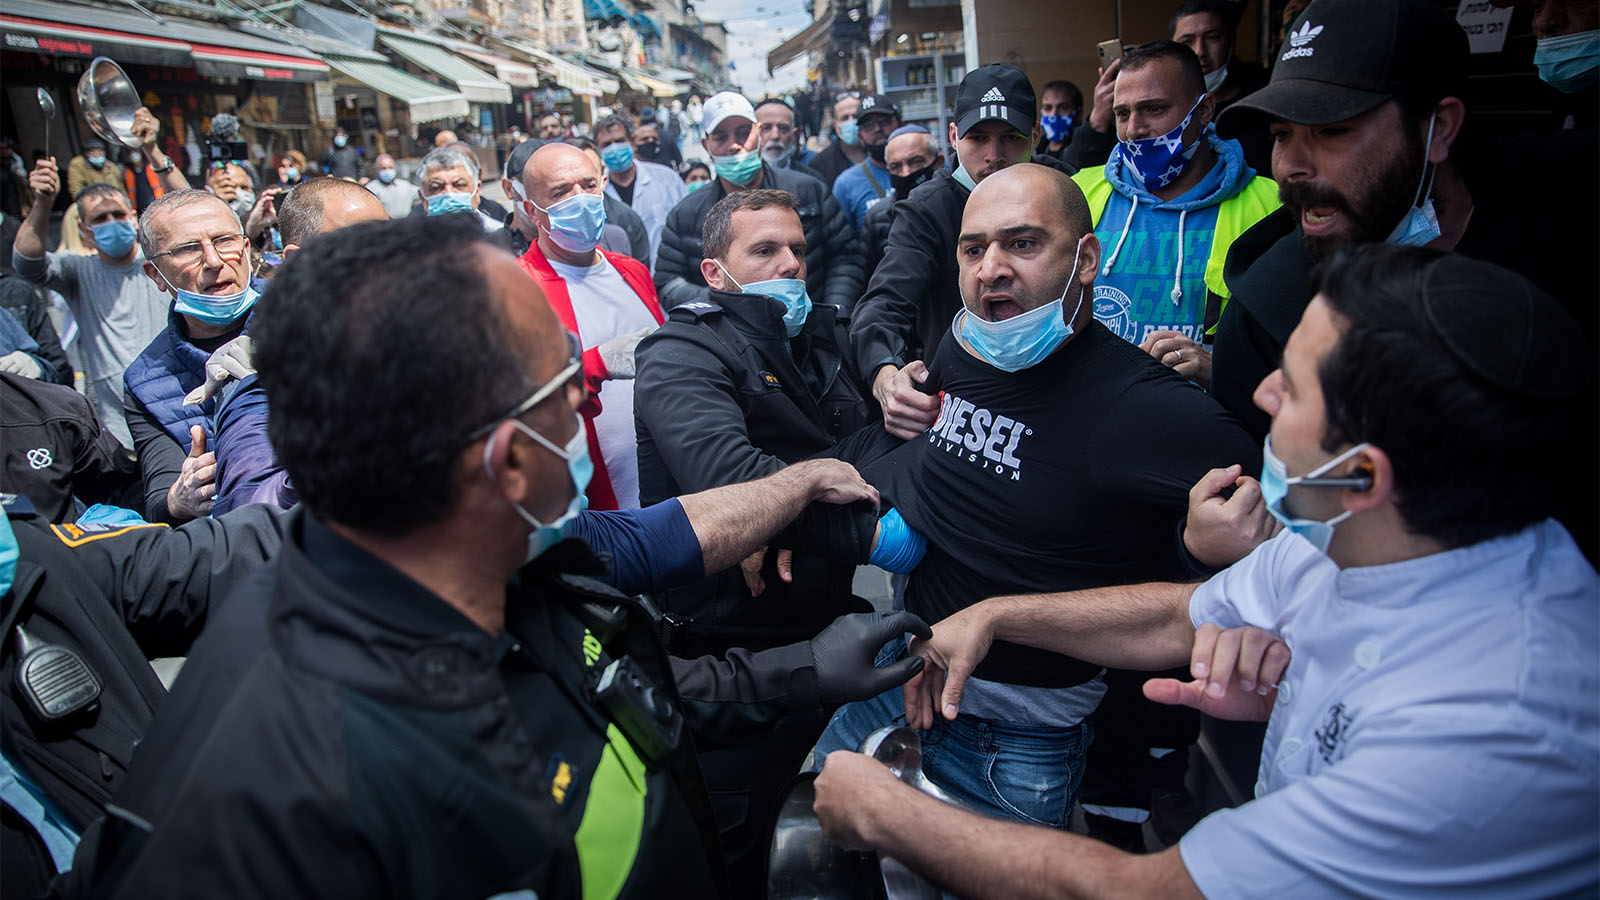 Machane Yehuda market merchants clashing with the police (Photograph: Yonatan Zindel/Flah90)